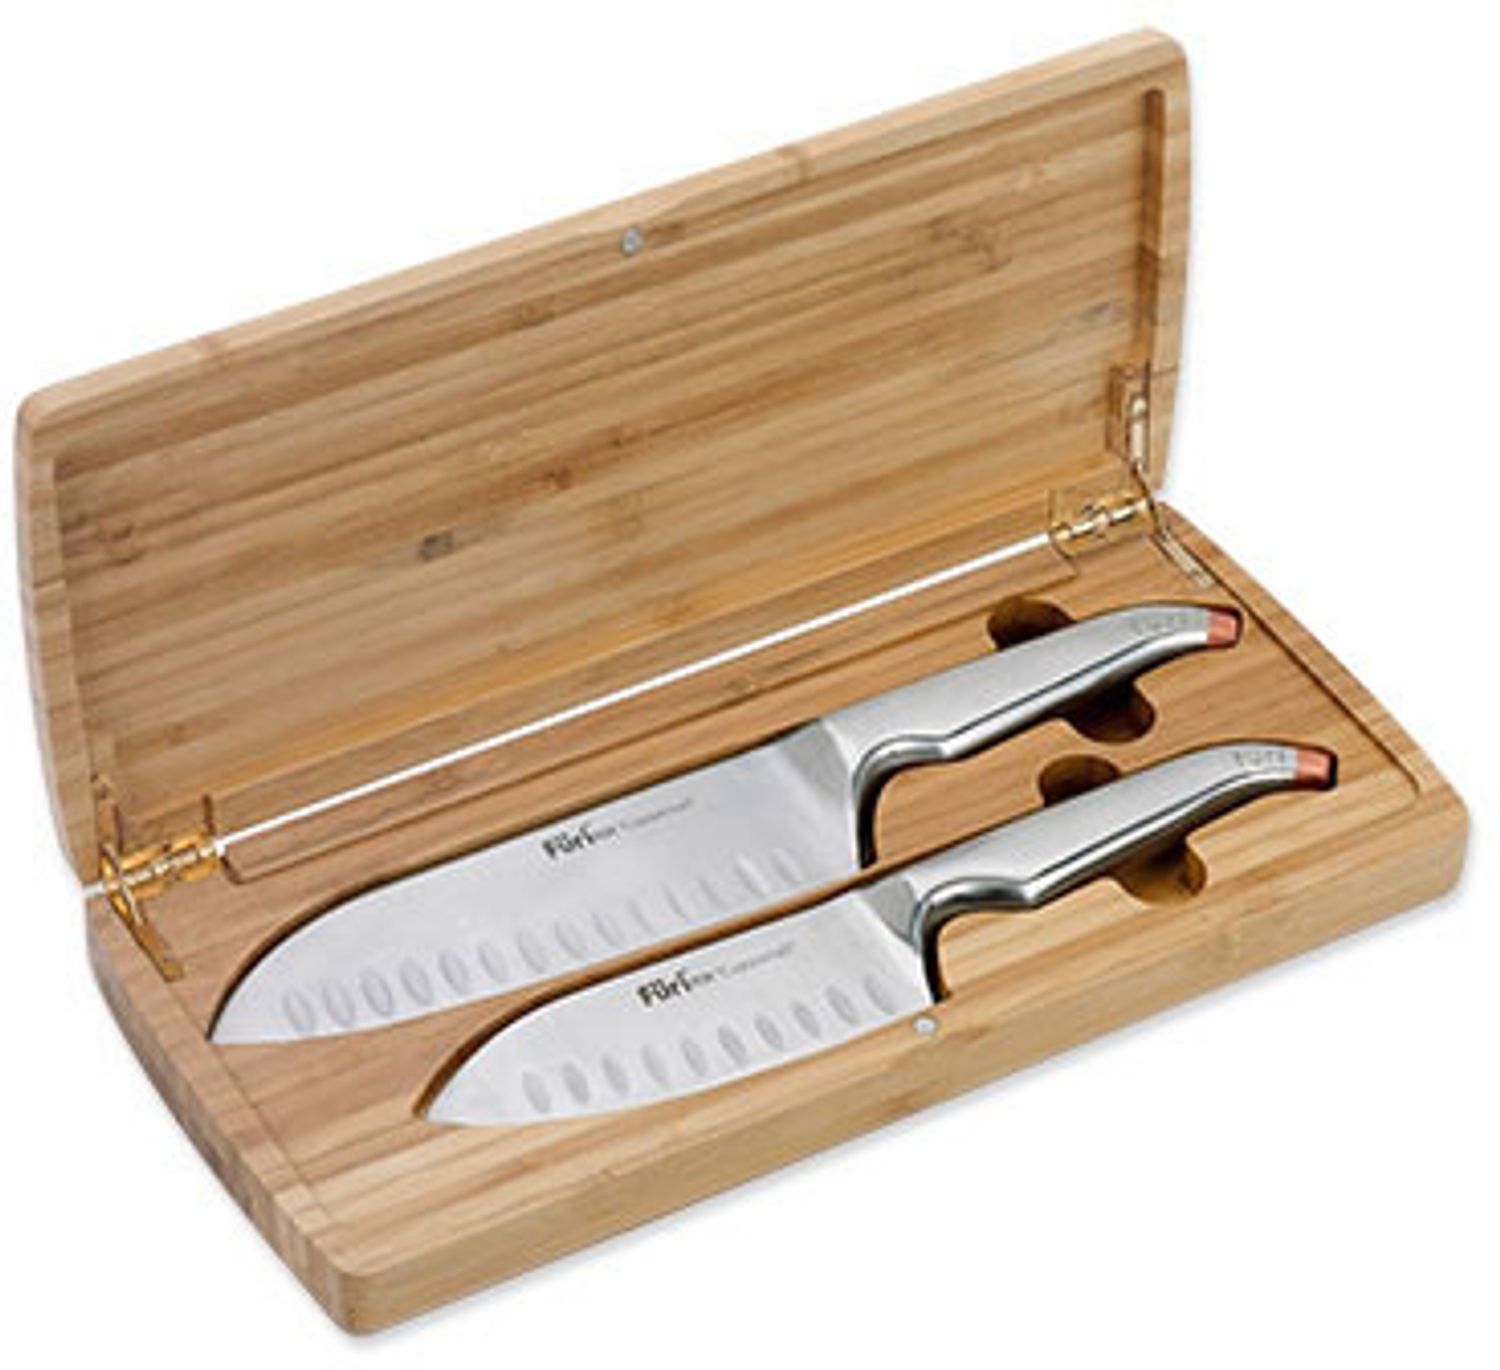 Rachael Ray Knives and Japanese Bamboo Wood Block Set 5 Slots 1 Knife  Missing